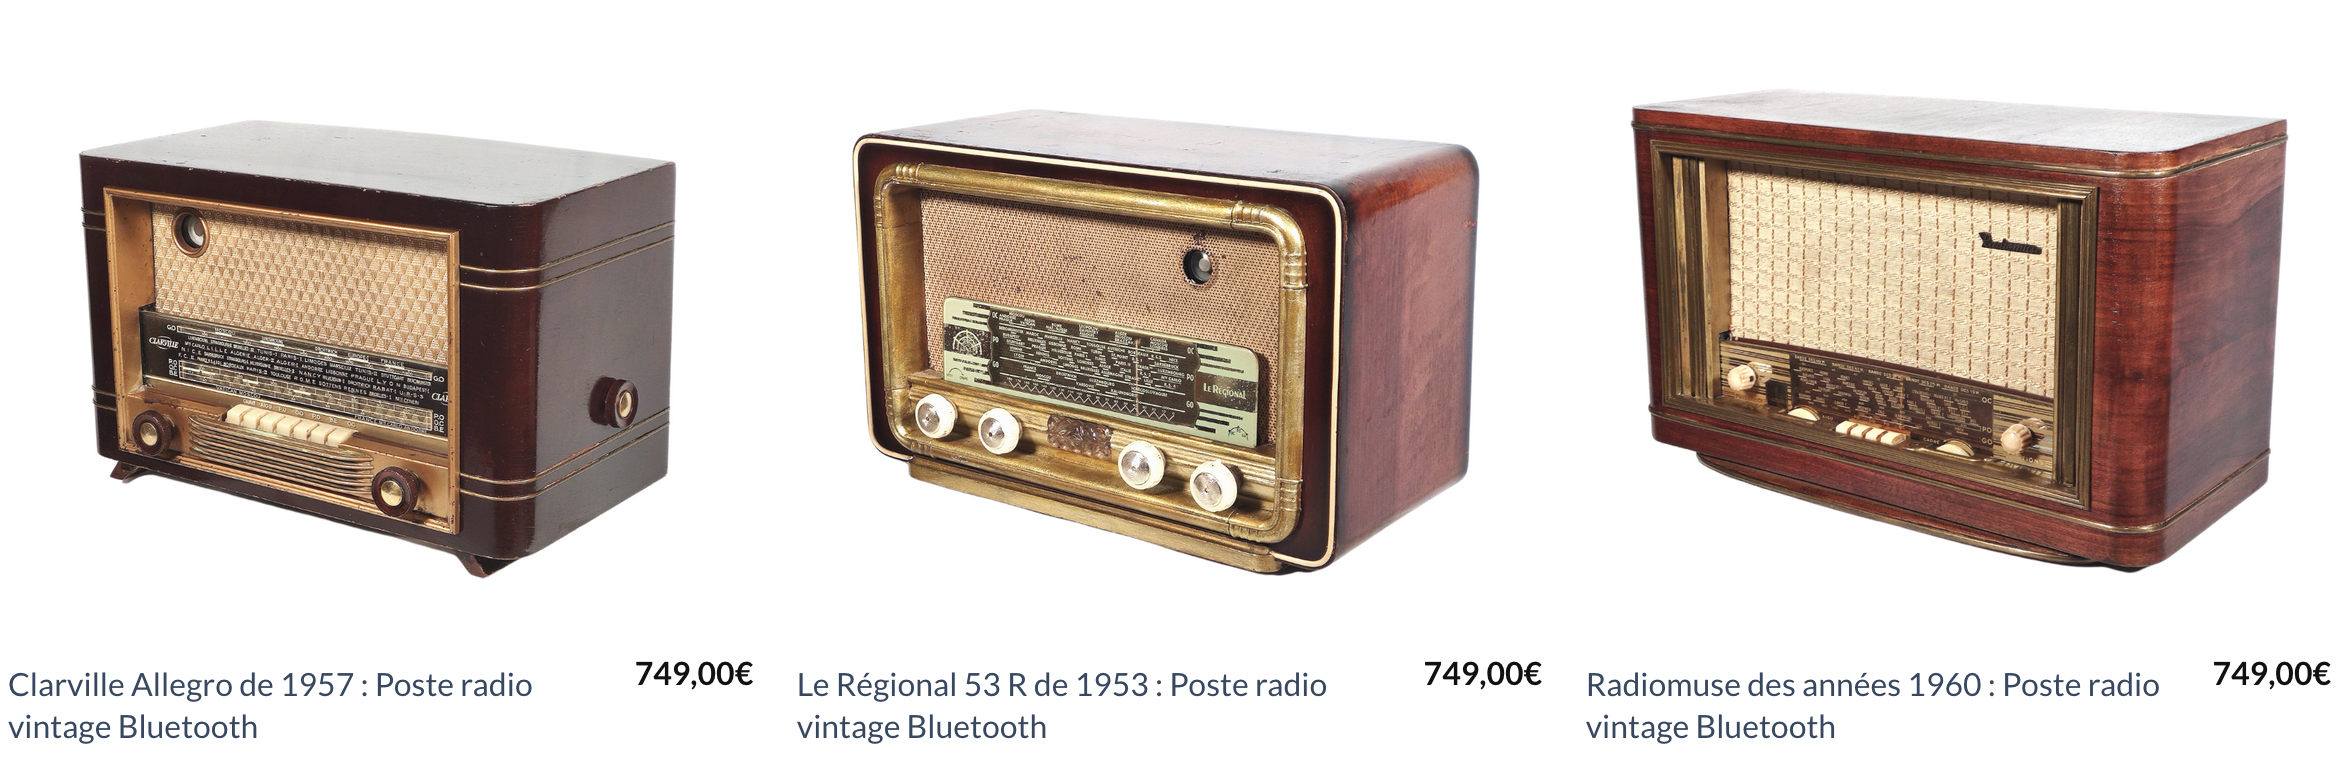 Radiola RA 45A - de 1951 : Poste radio vintage Bluetooth - LES DOYENS Radios  vintage remises au son du jour en Bluetooth